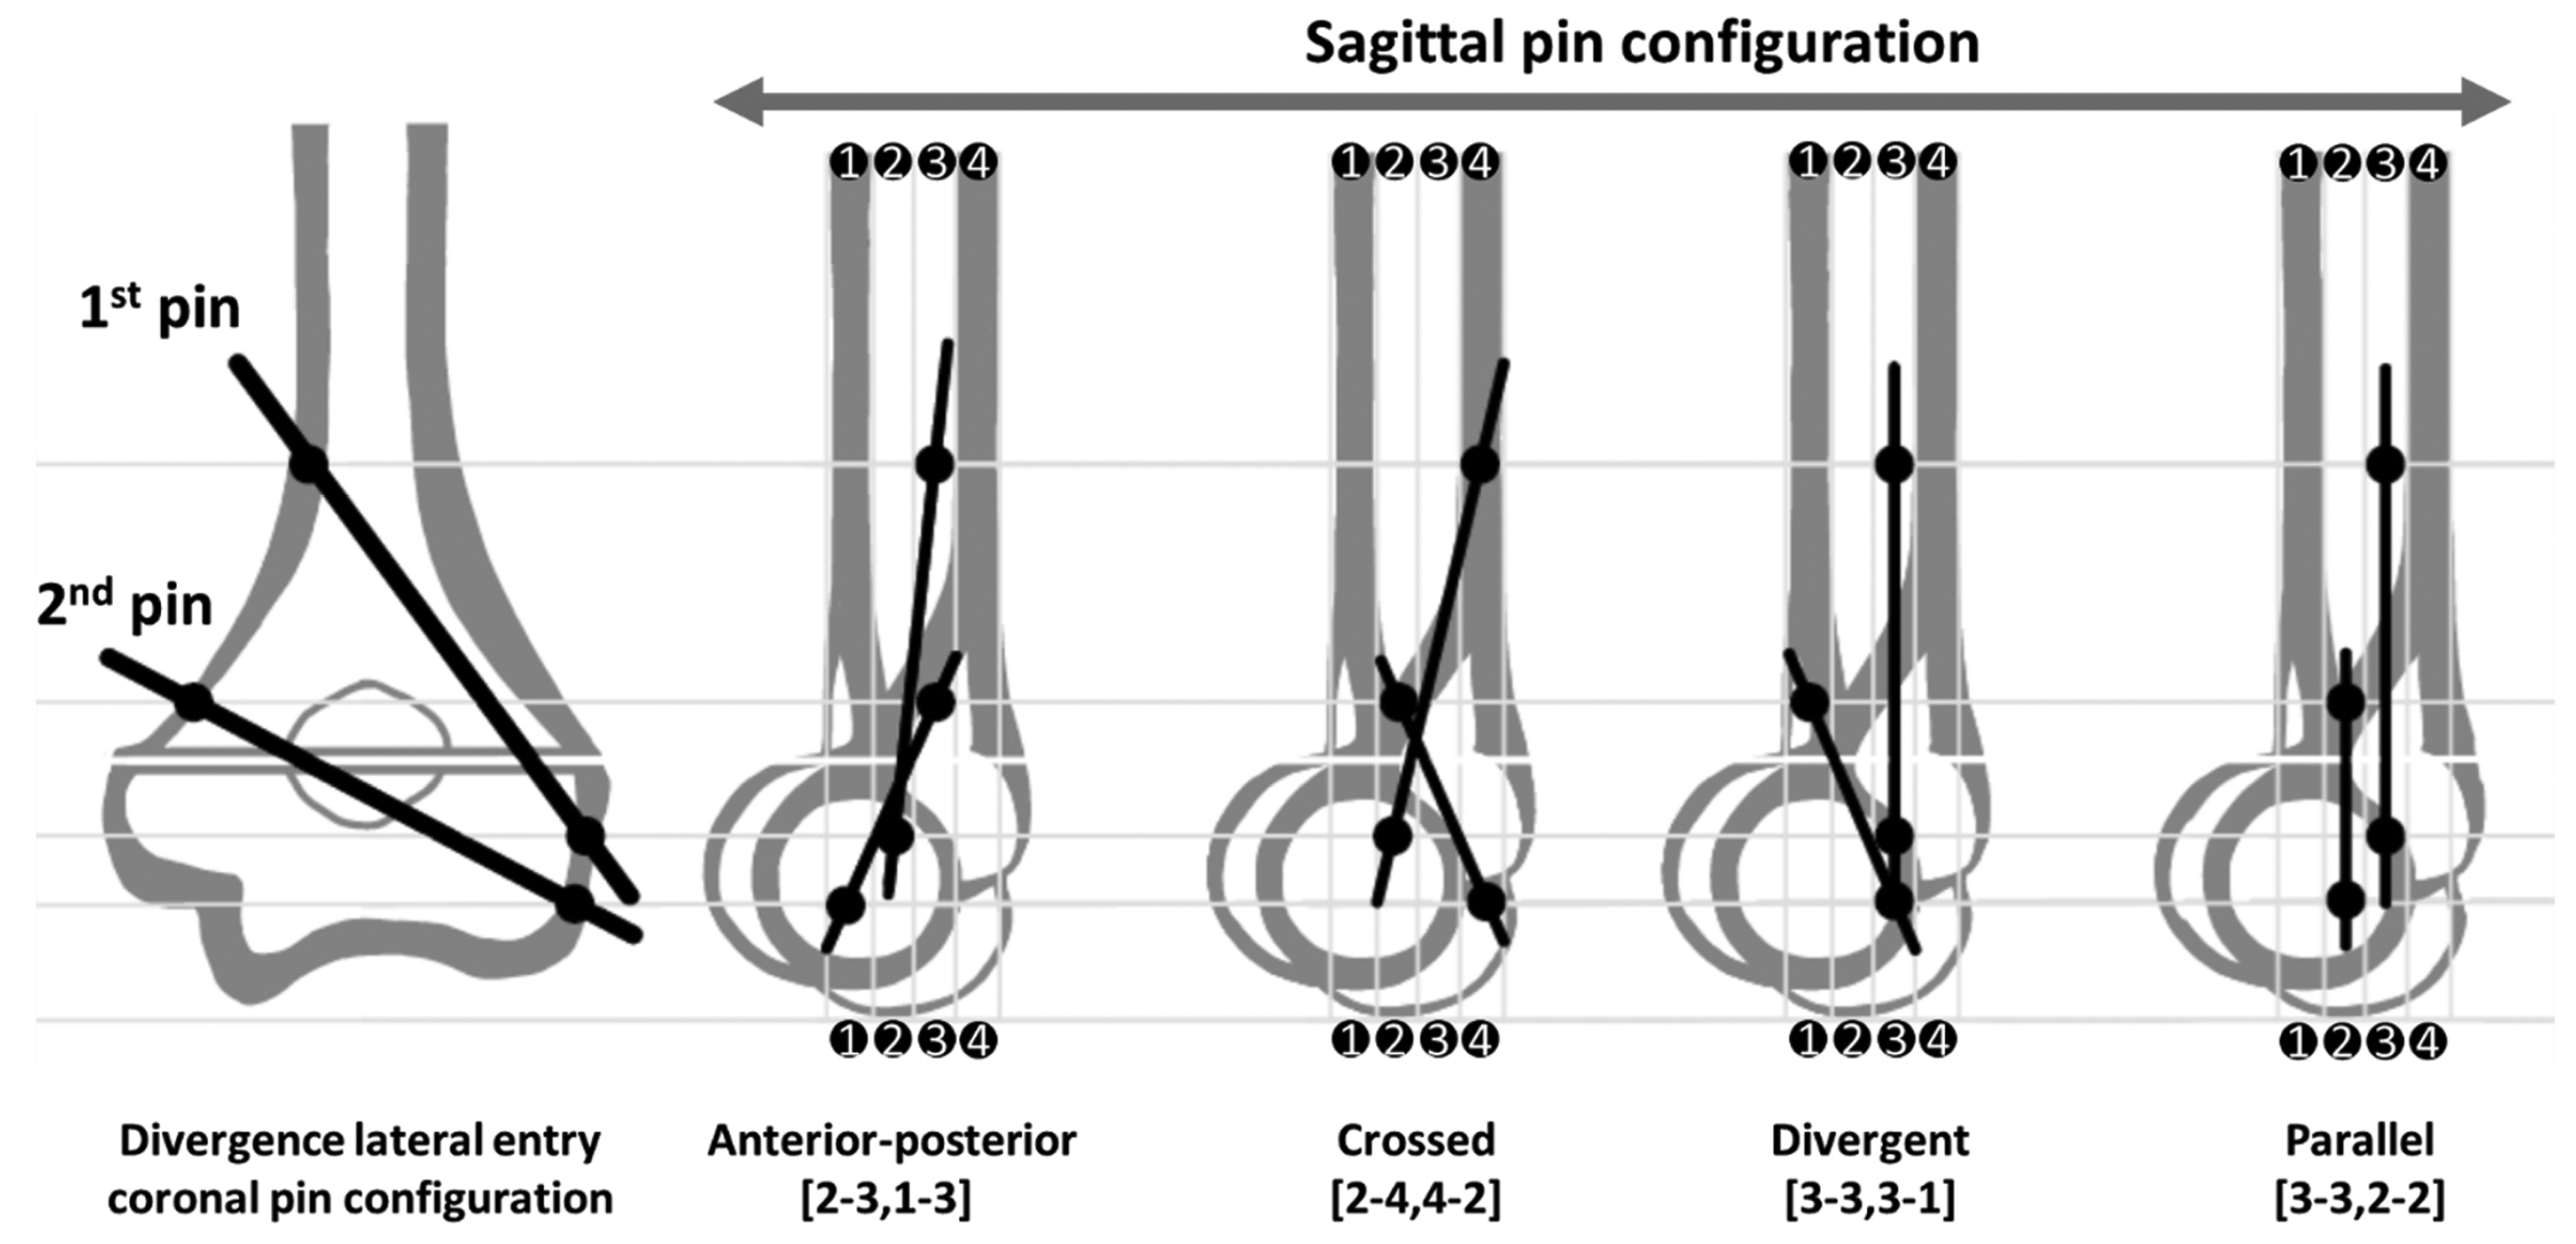 Representative examples of mid-axial and corresponding sagittal